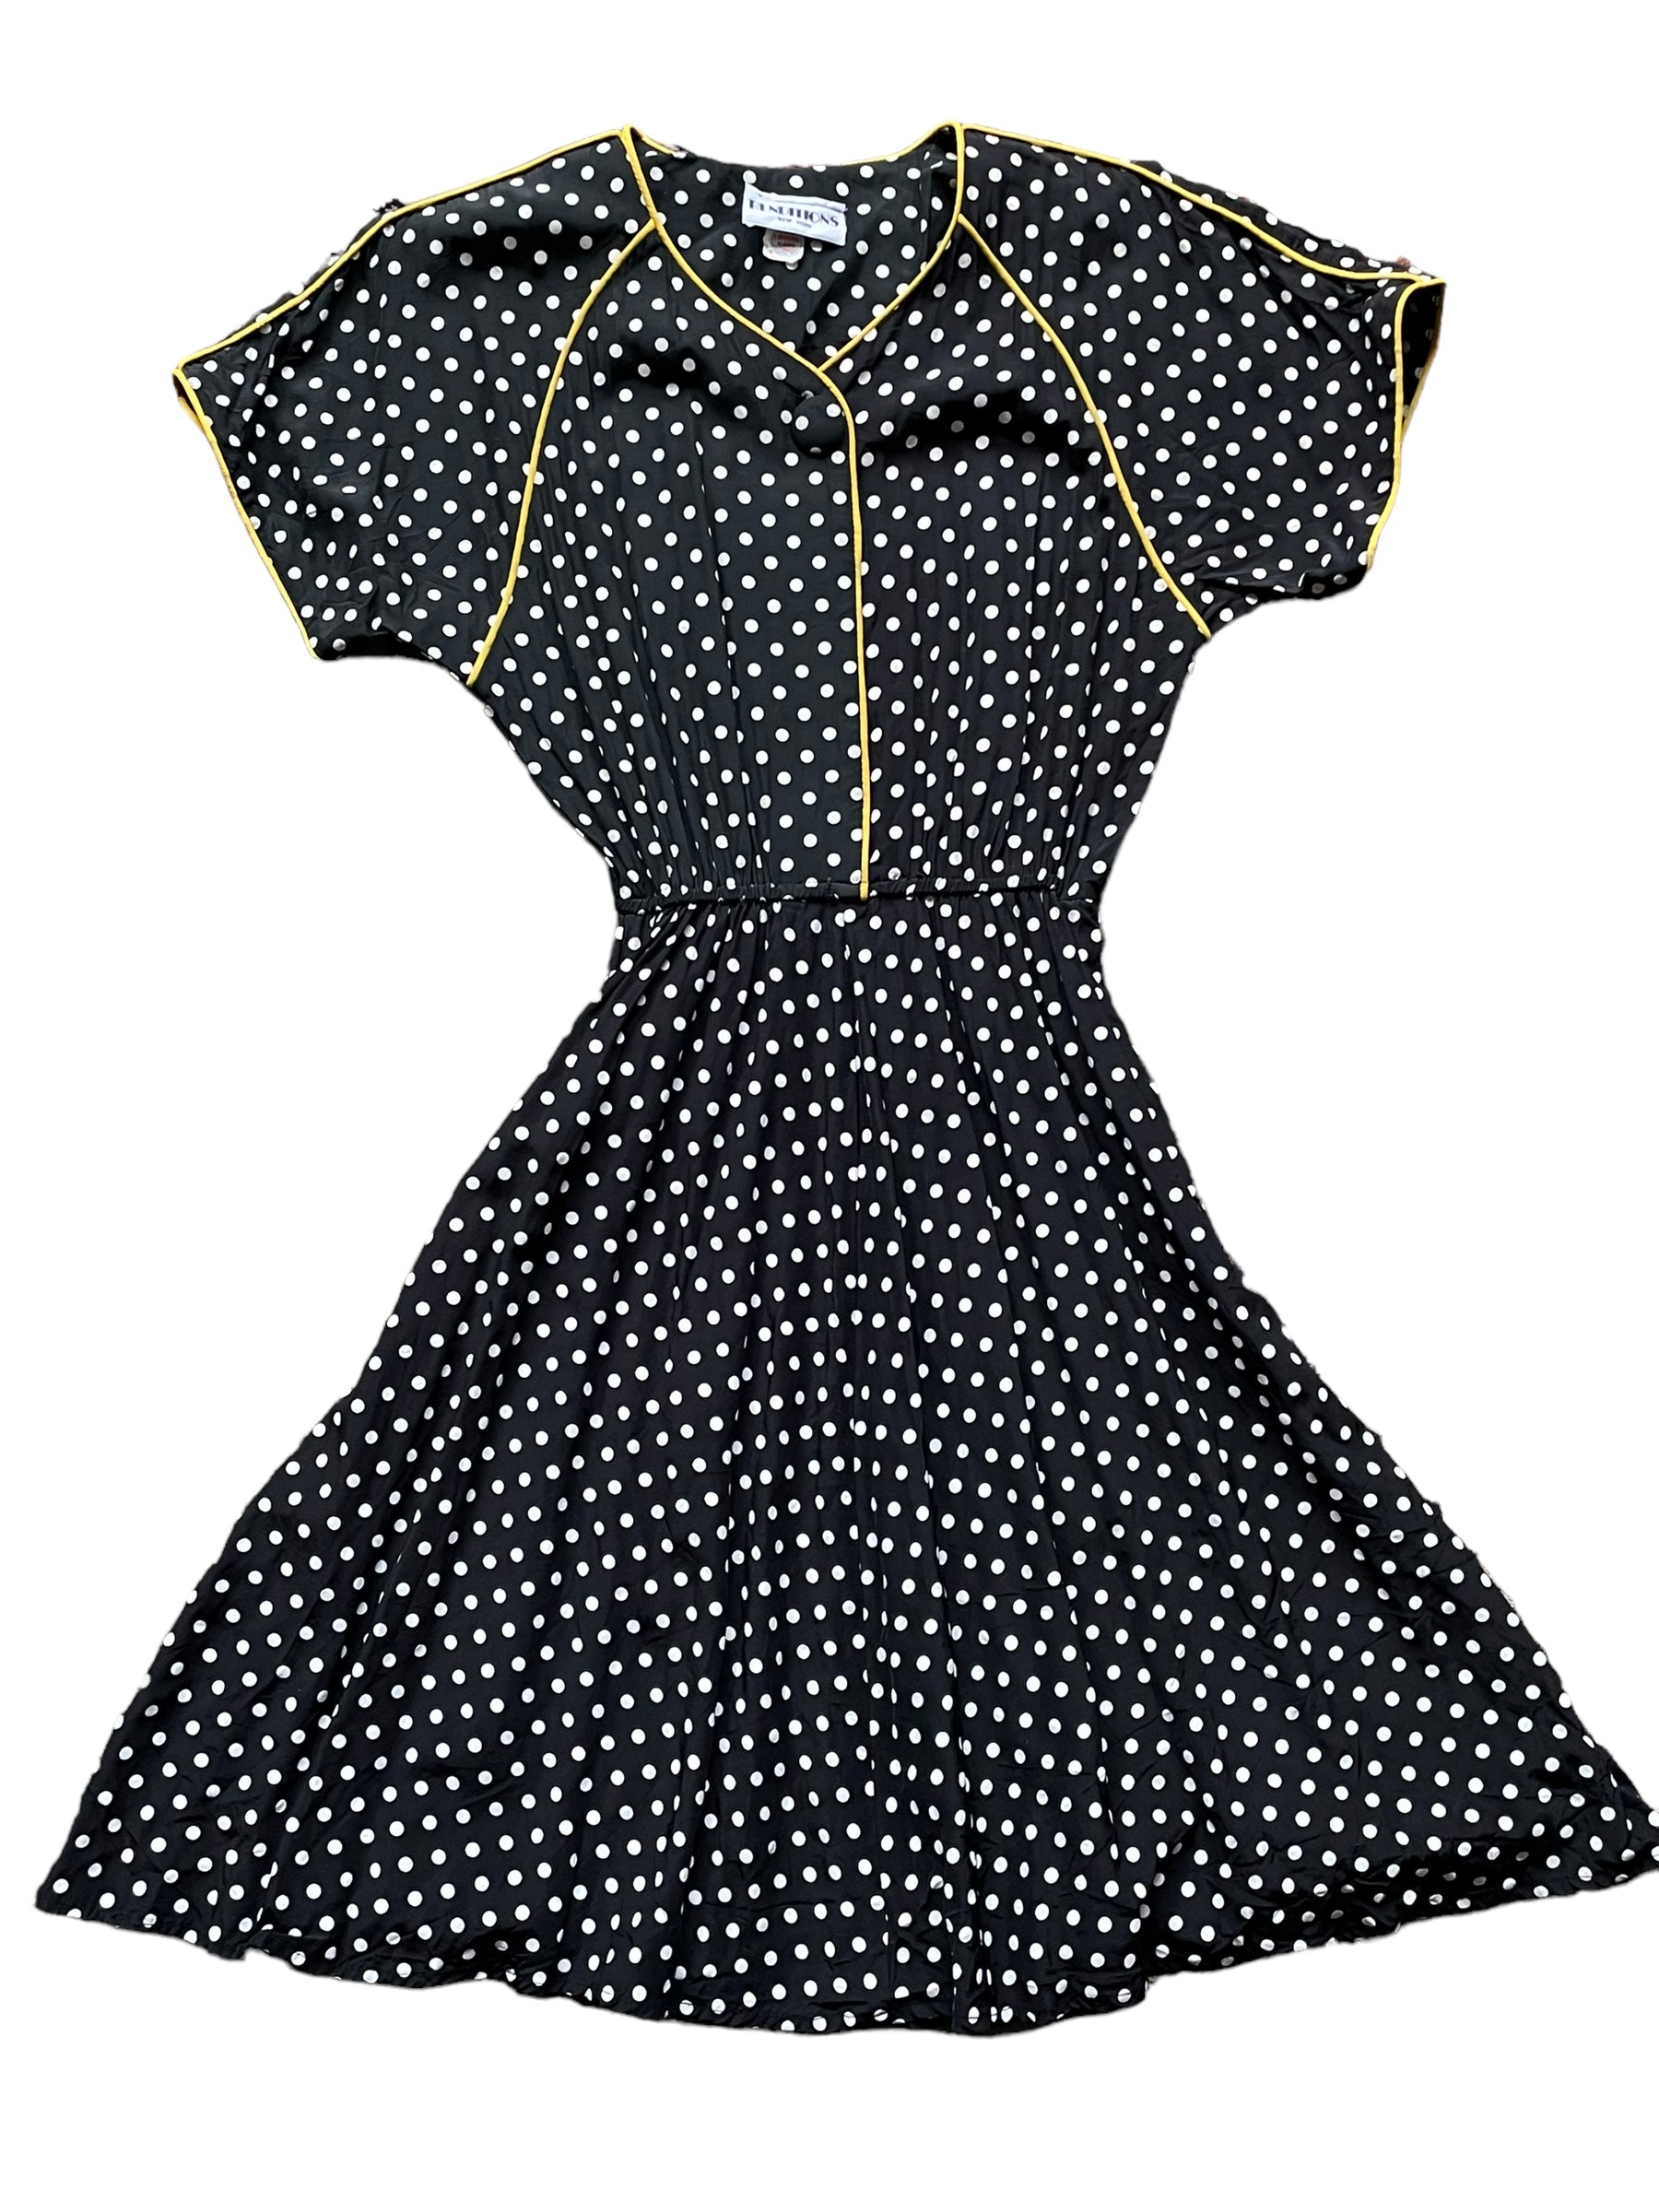 Full front view of Vintage 80s Does 40s Polka Dot Dress SZ M-L |  Barn Owl Vintage Dresses| Seattle Vintage Ladies Clothing